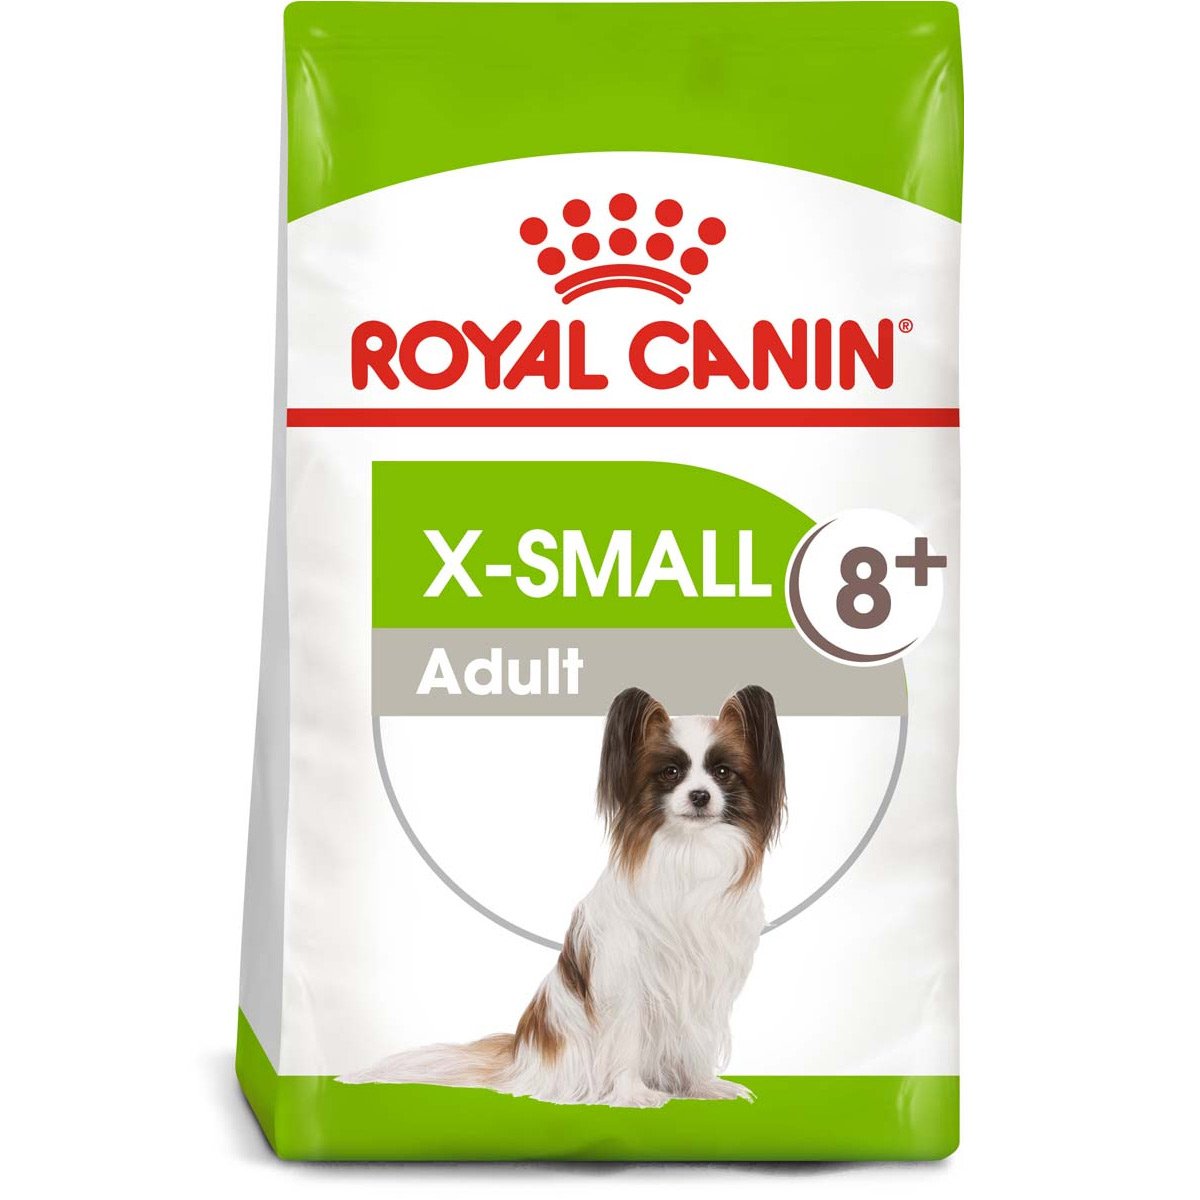 ROYAL CANIN X-SMALL Adult 8+ Trockenfutter für ältere sehr kleine Hunde 8+3kg von Royal Canin